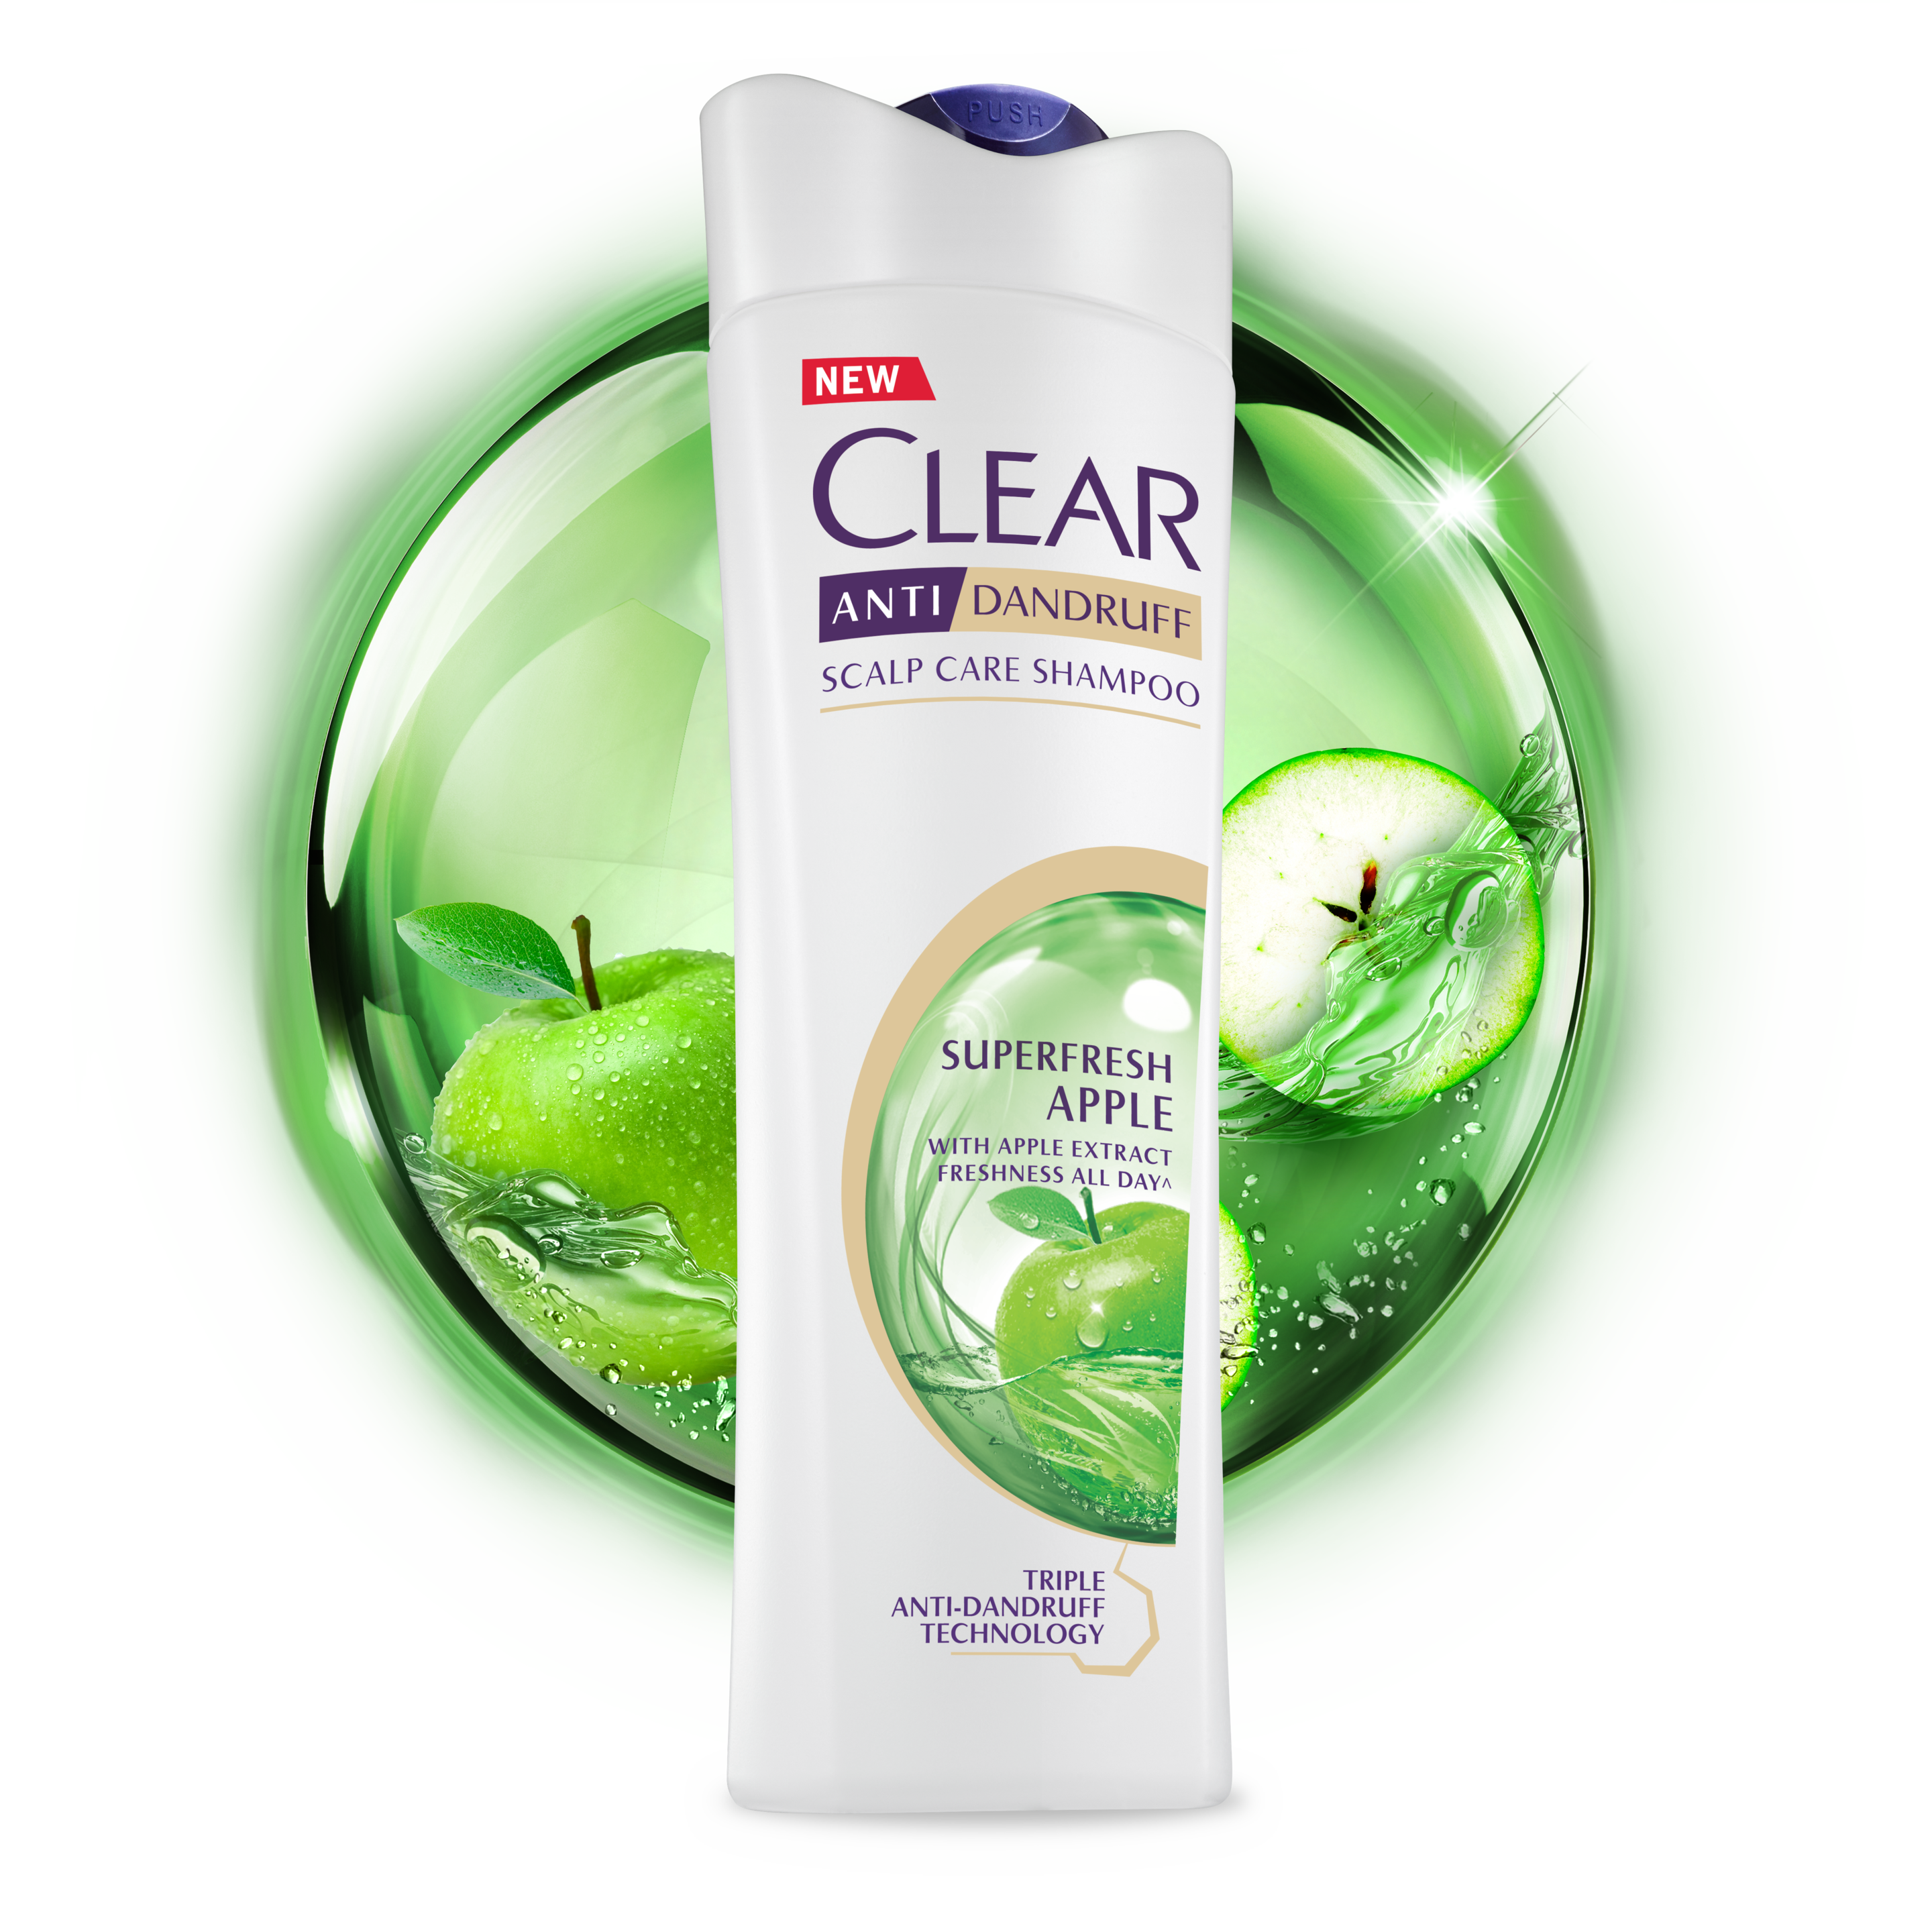 CLEAR Superfresh Apple Anti-dandruff Shampoo